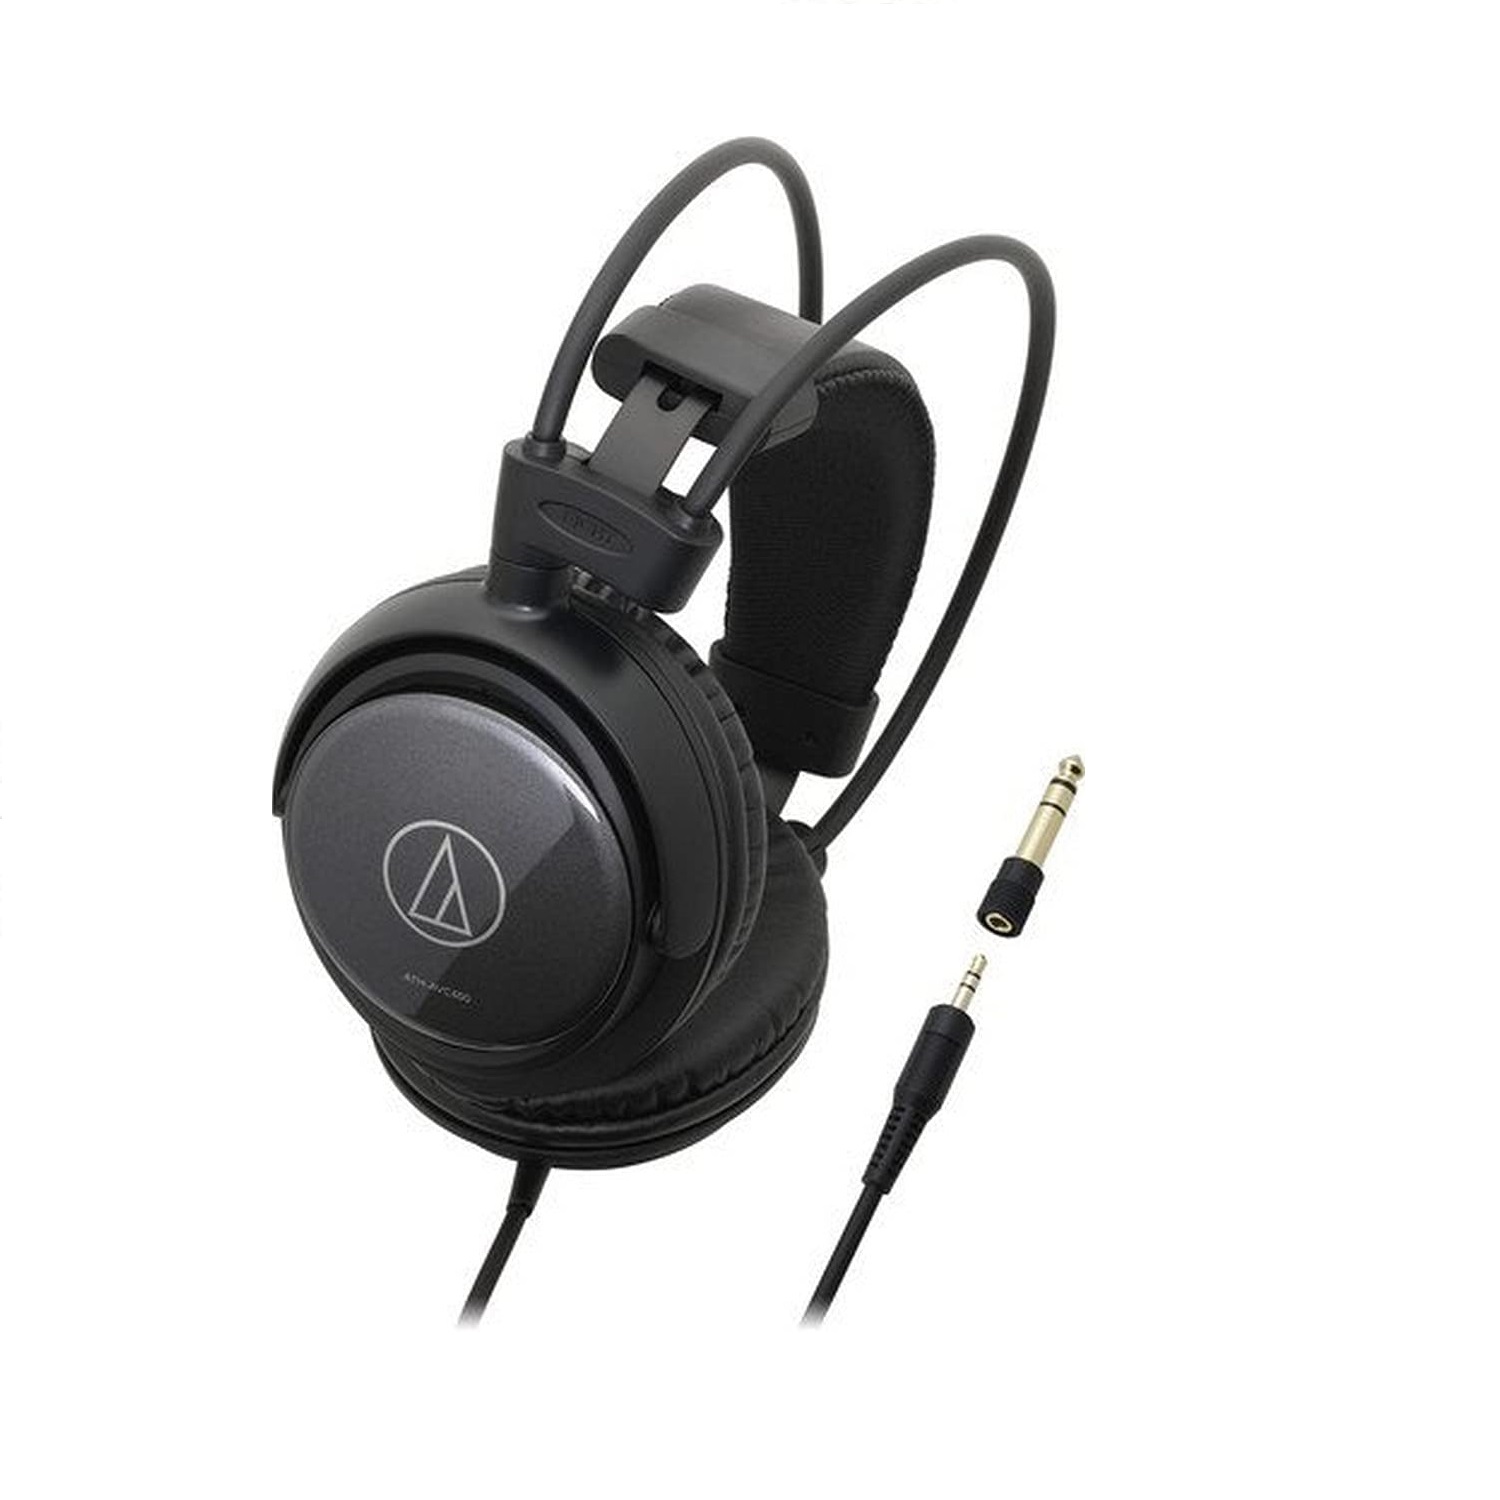 Мониторные наушники Audio-Technica ATH-AVC400, черный mrearpads earpads for audio technica ath avc200 ath avc400 ath avc500 headphone rpalcement ear pads earcushions parts